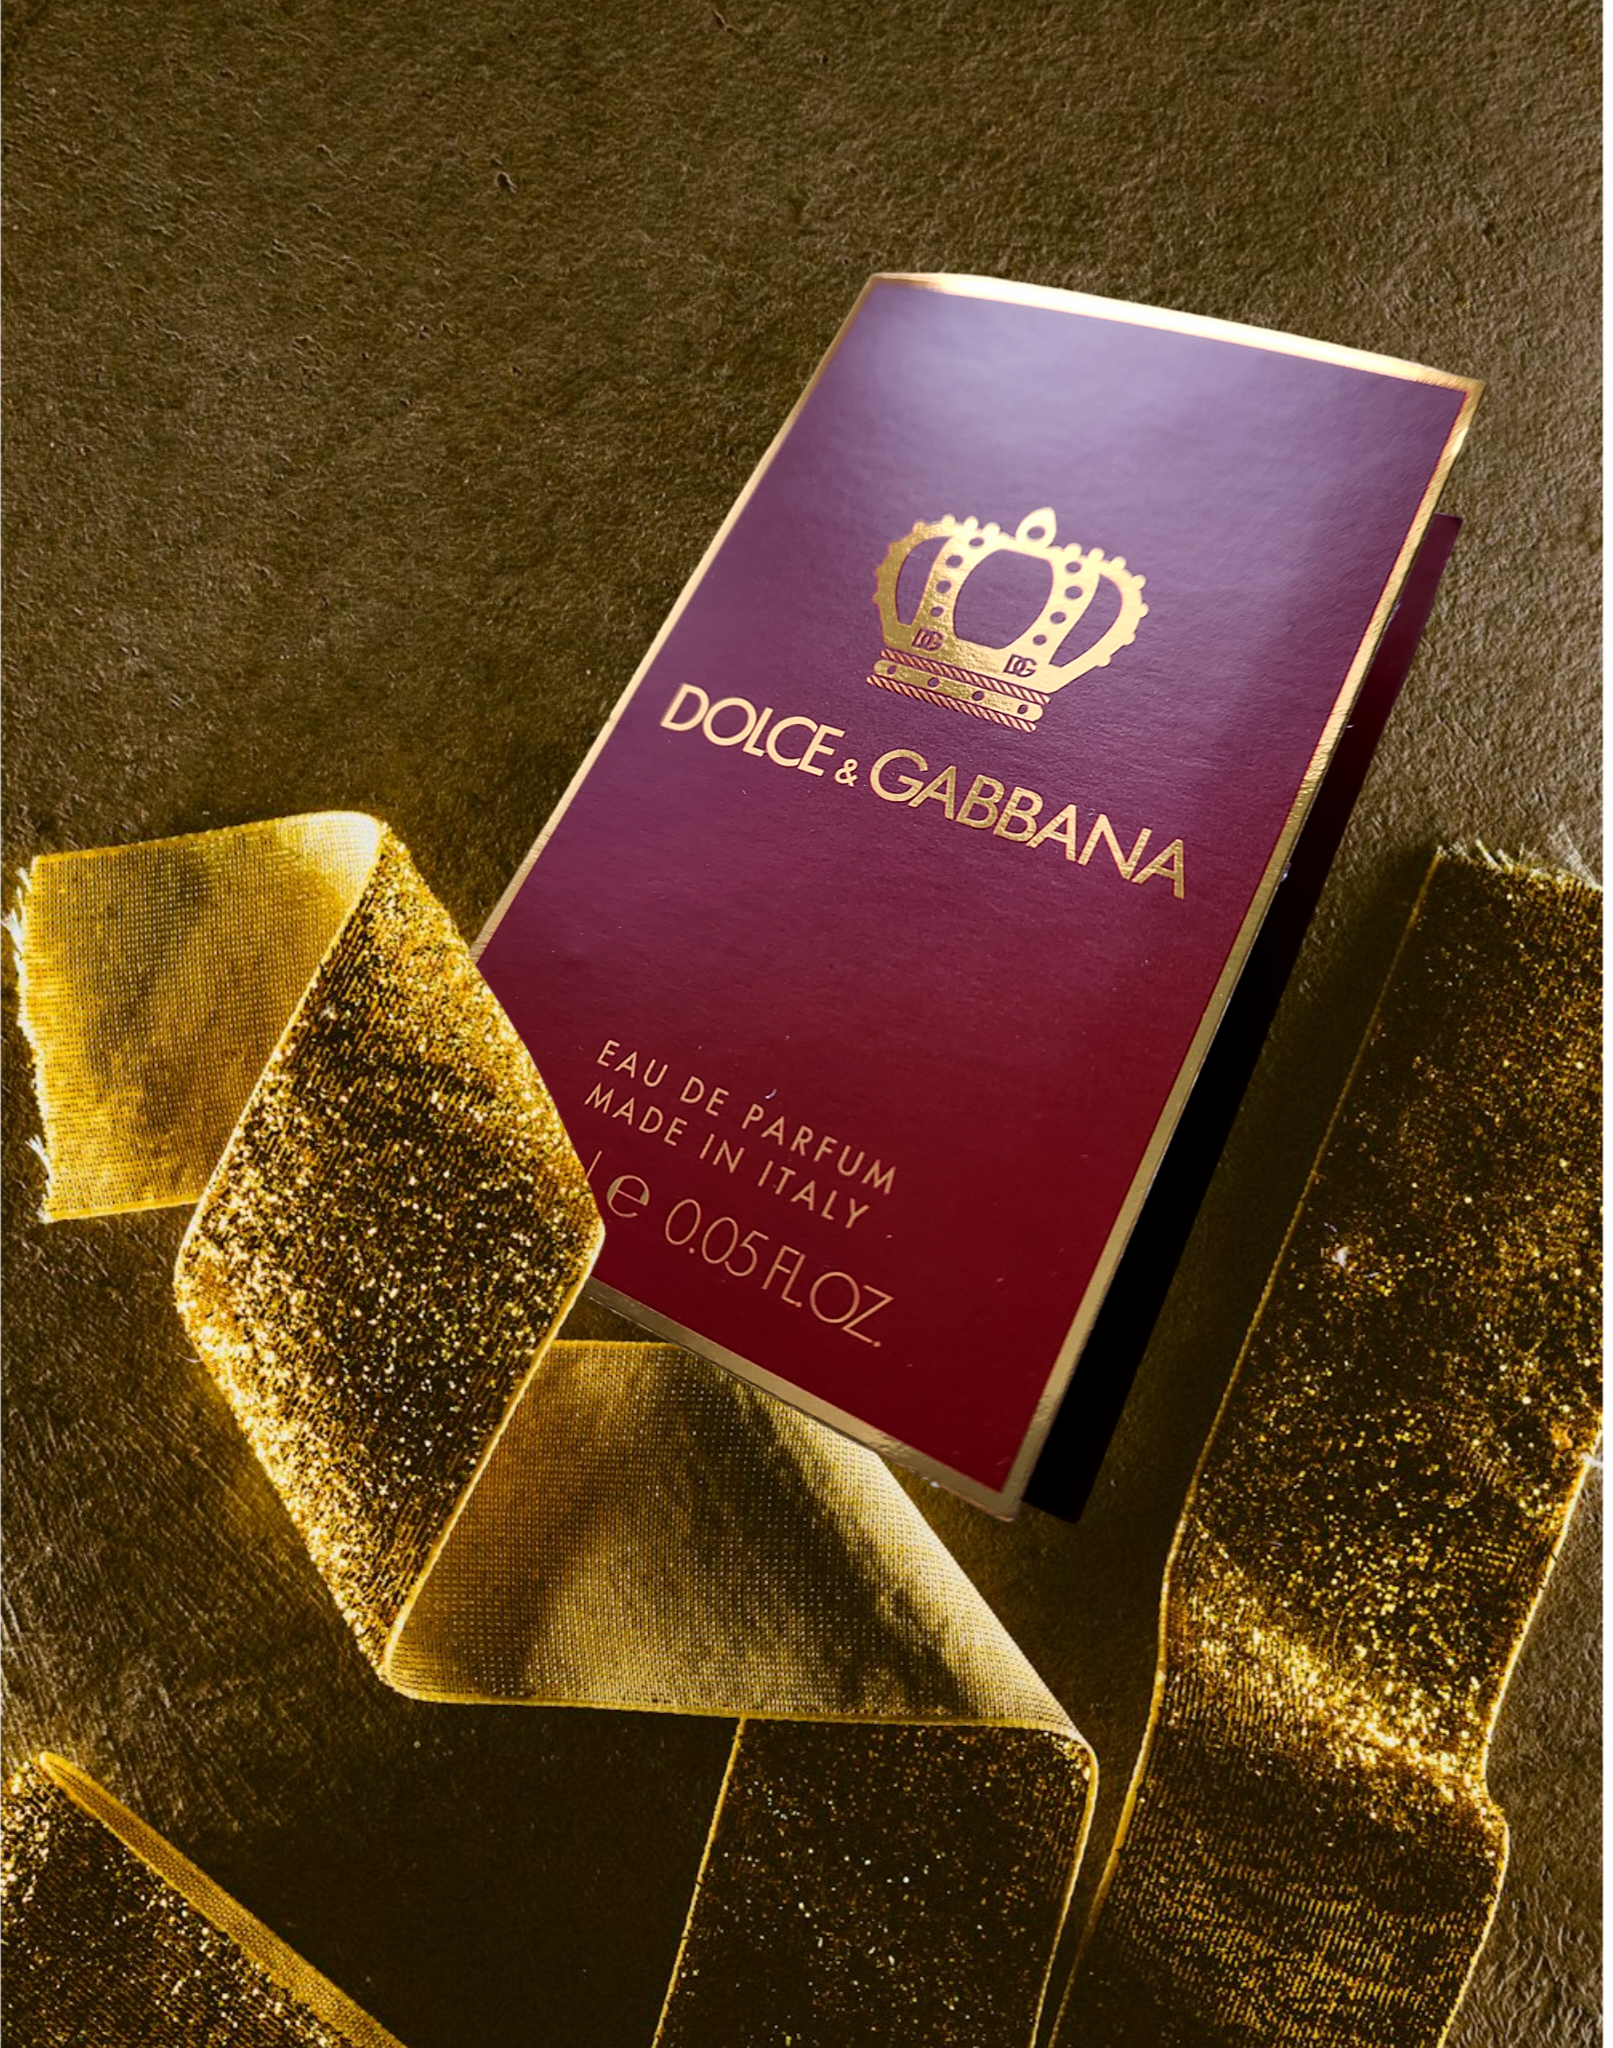 Q by Dolce & Gabbana - надягаємо парфумерну корону